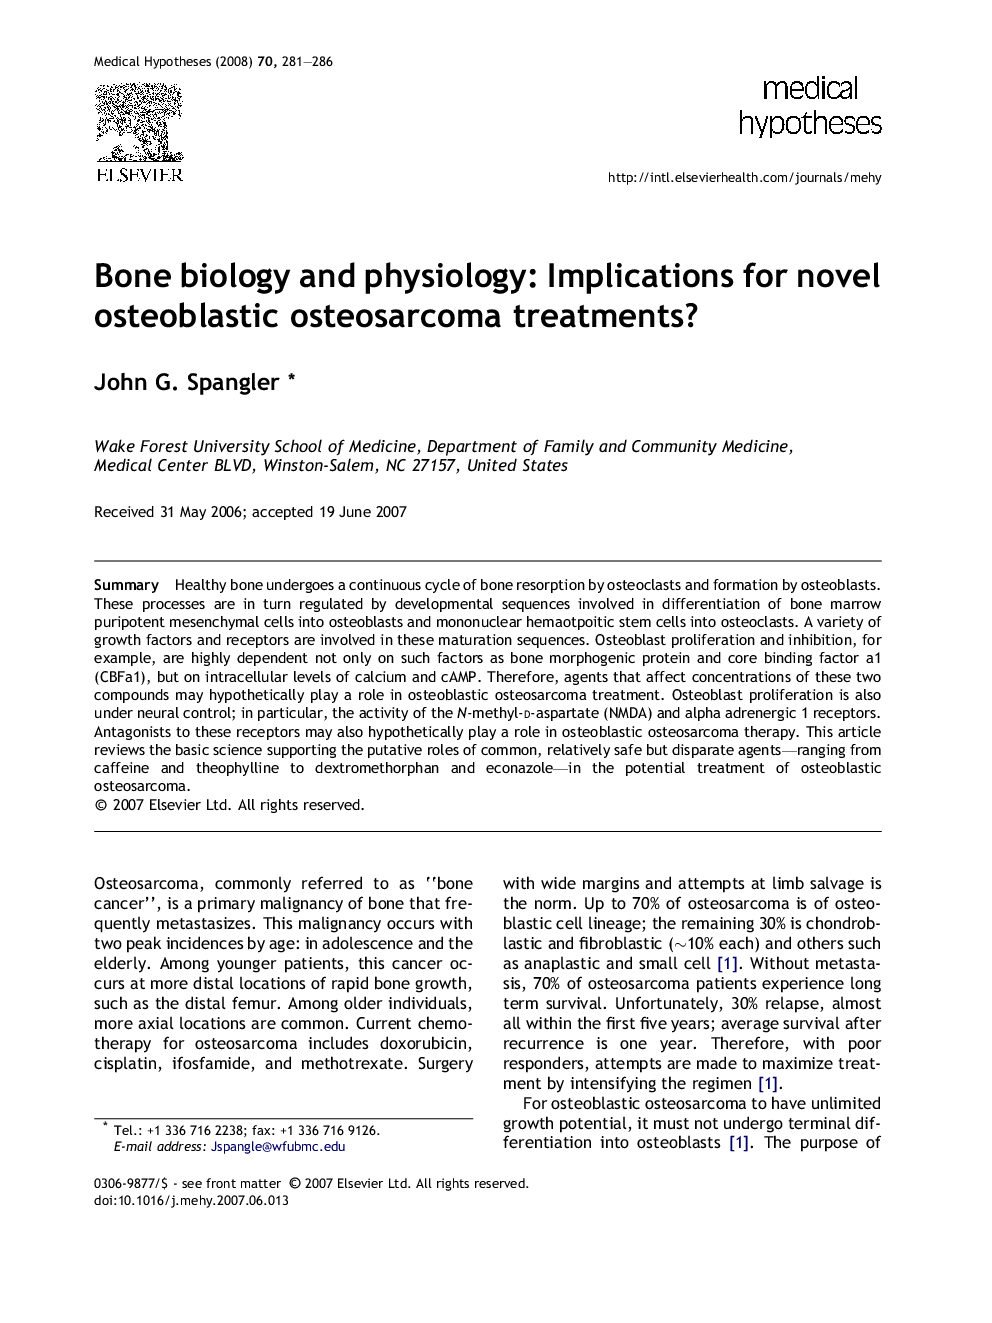 Bone biology and physiology: Implications for novel osteoblastic osteosarcoma treatments?